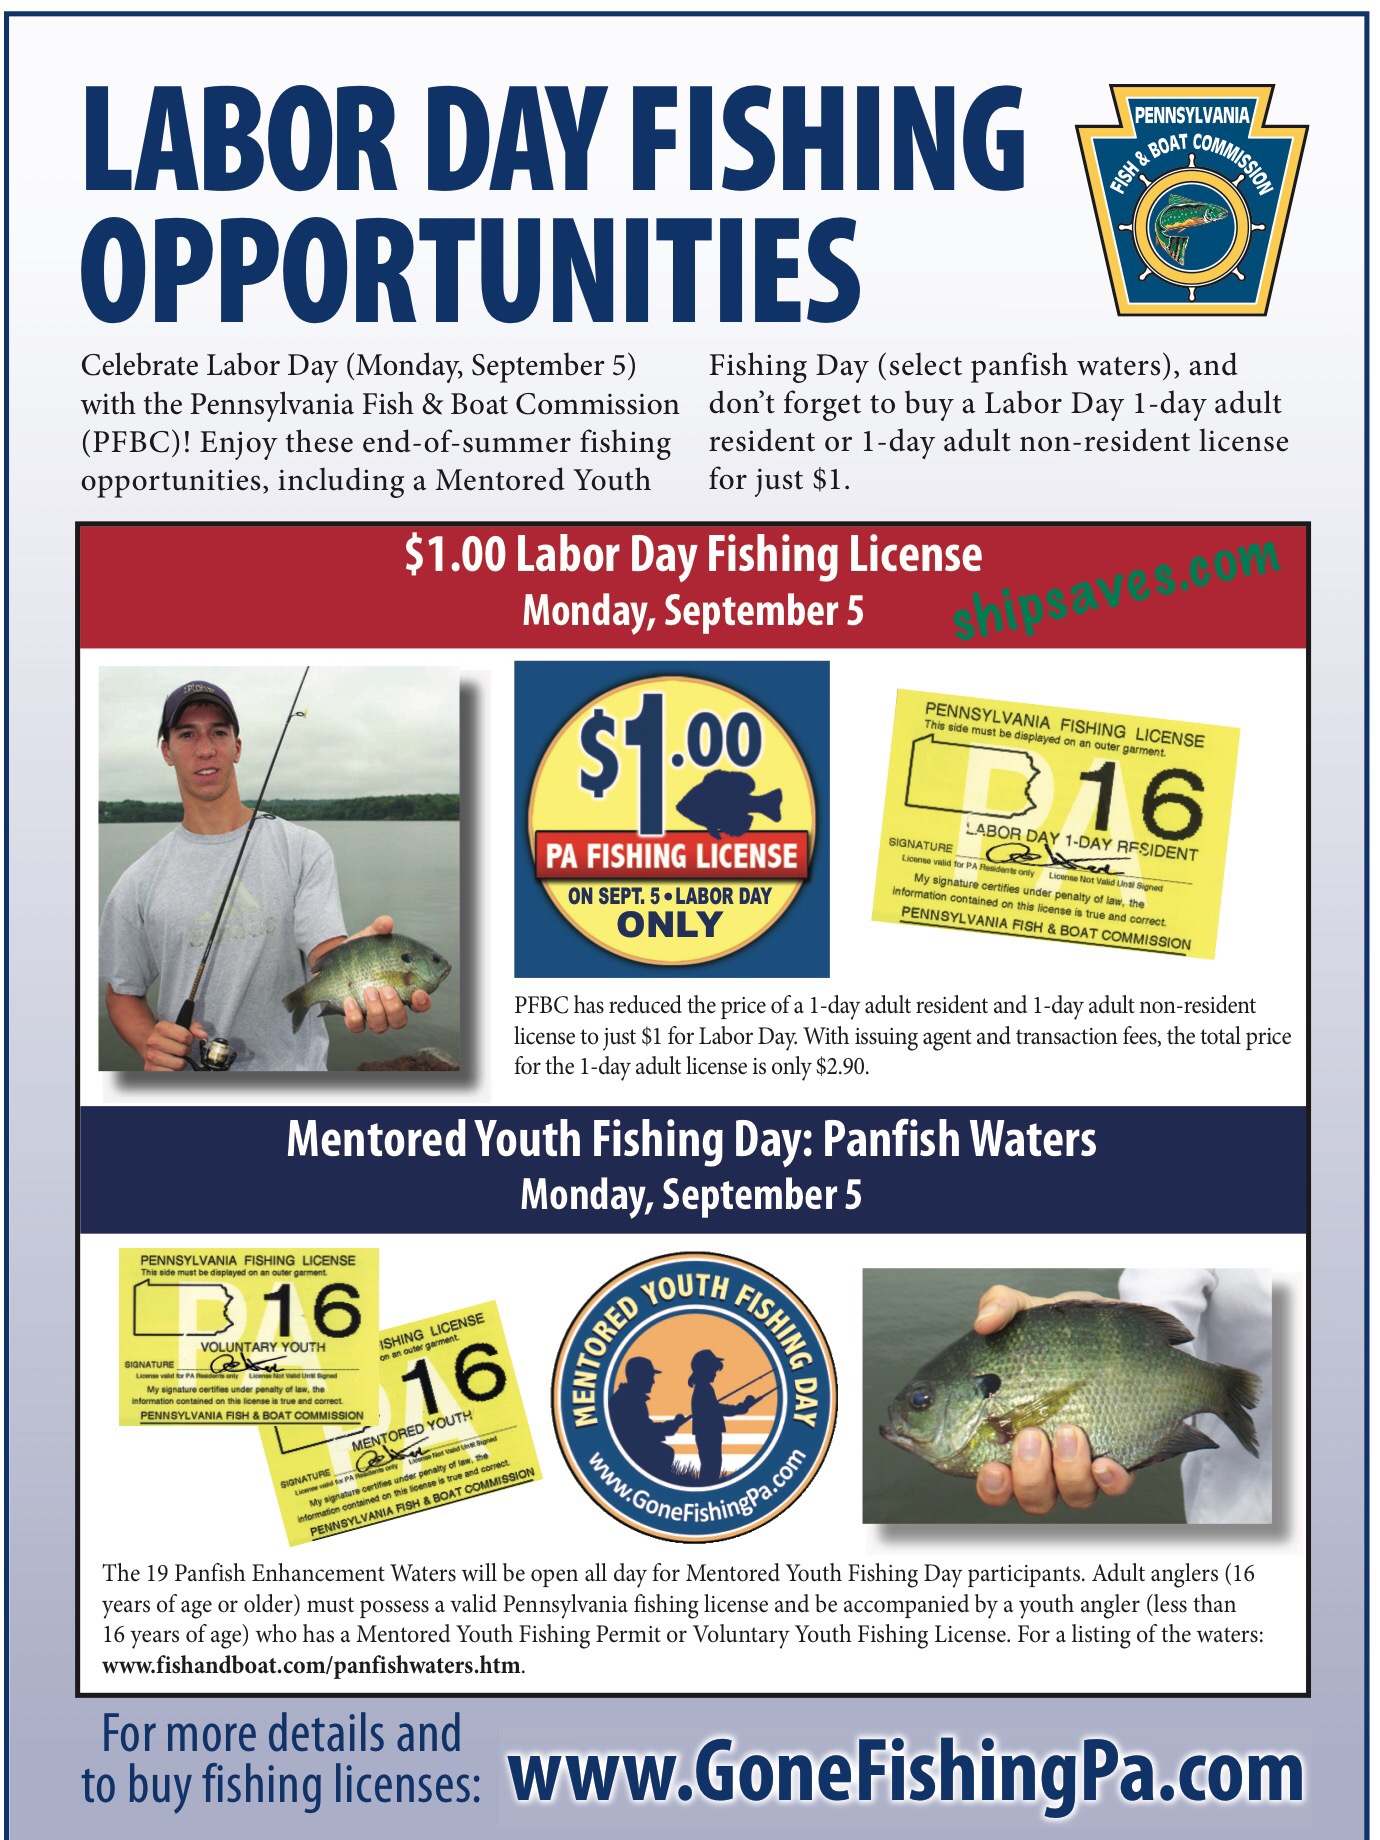 $1 Labor Day Fishing License  Monday, September 5 - SHIP SAVES